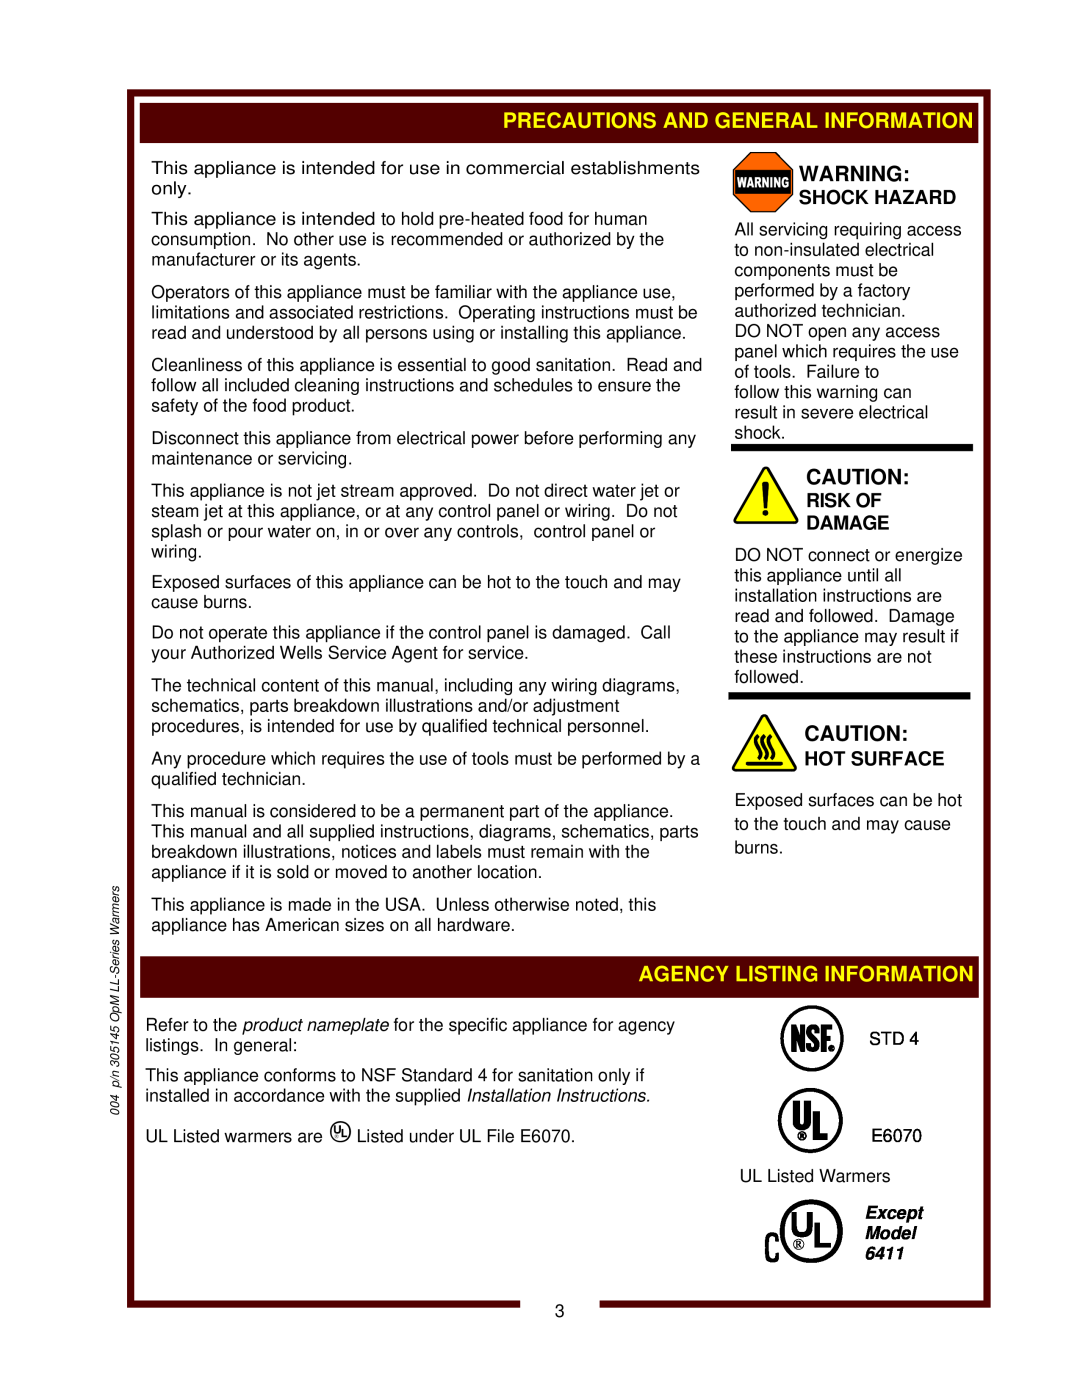 Wells 6411, SC-7, SC-1, LLCH-1220 Agency Listing Information, Shock Hazard, Risk Of Damage, Hot Surface, VExcept Model 